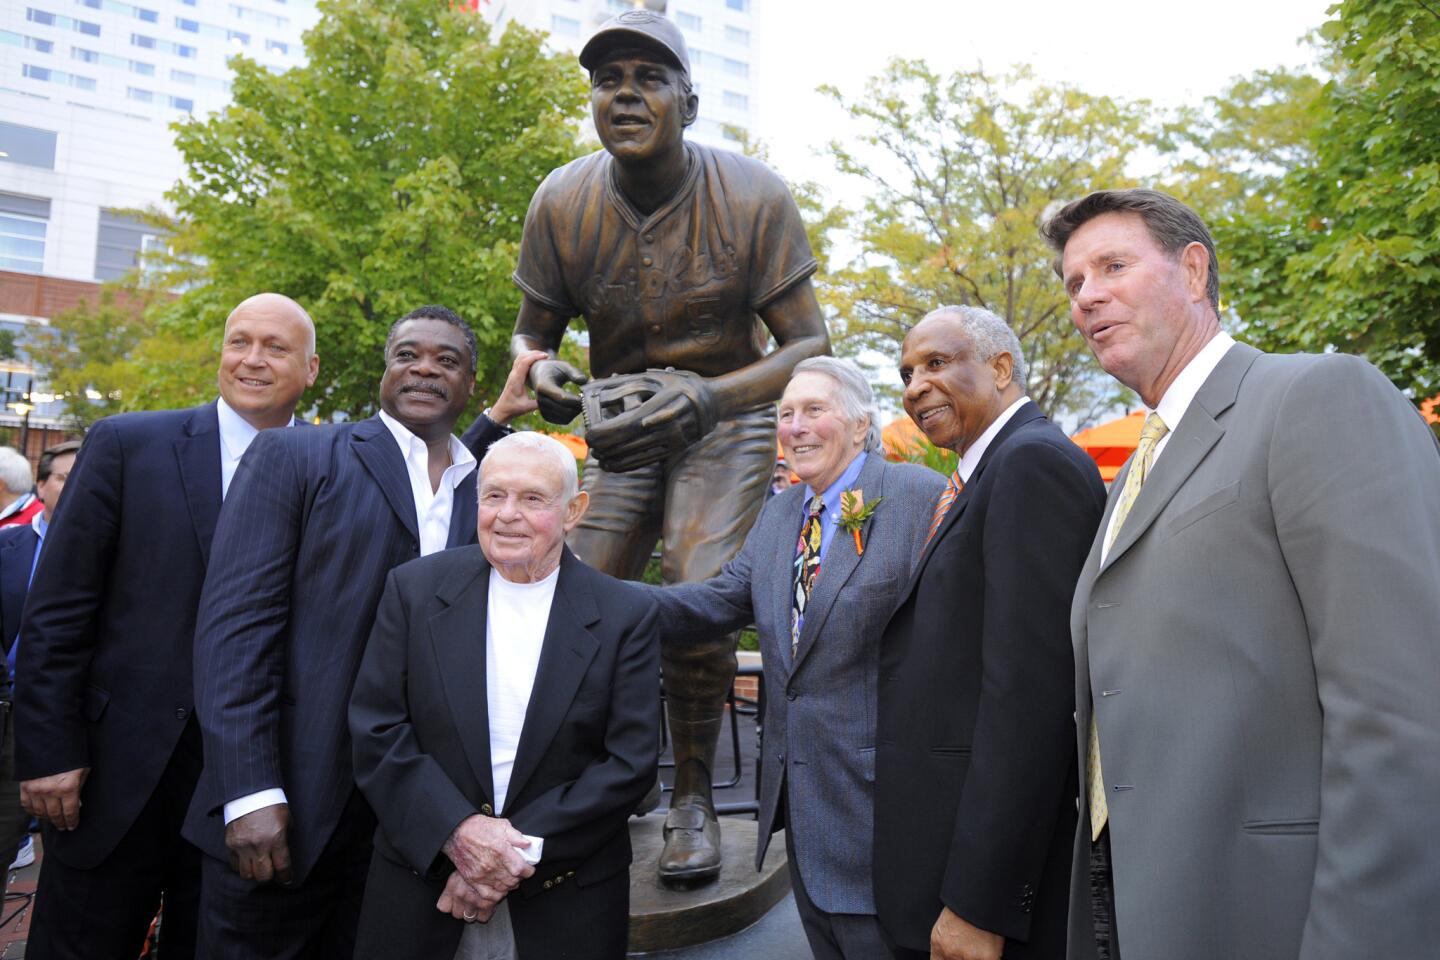 Brooks Robinson, MLB Hall of Famer and Baltimore Orioles legend